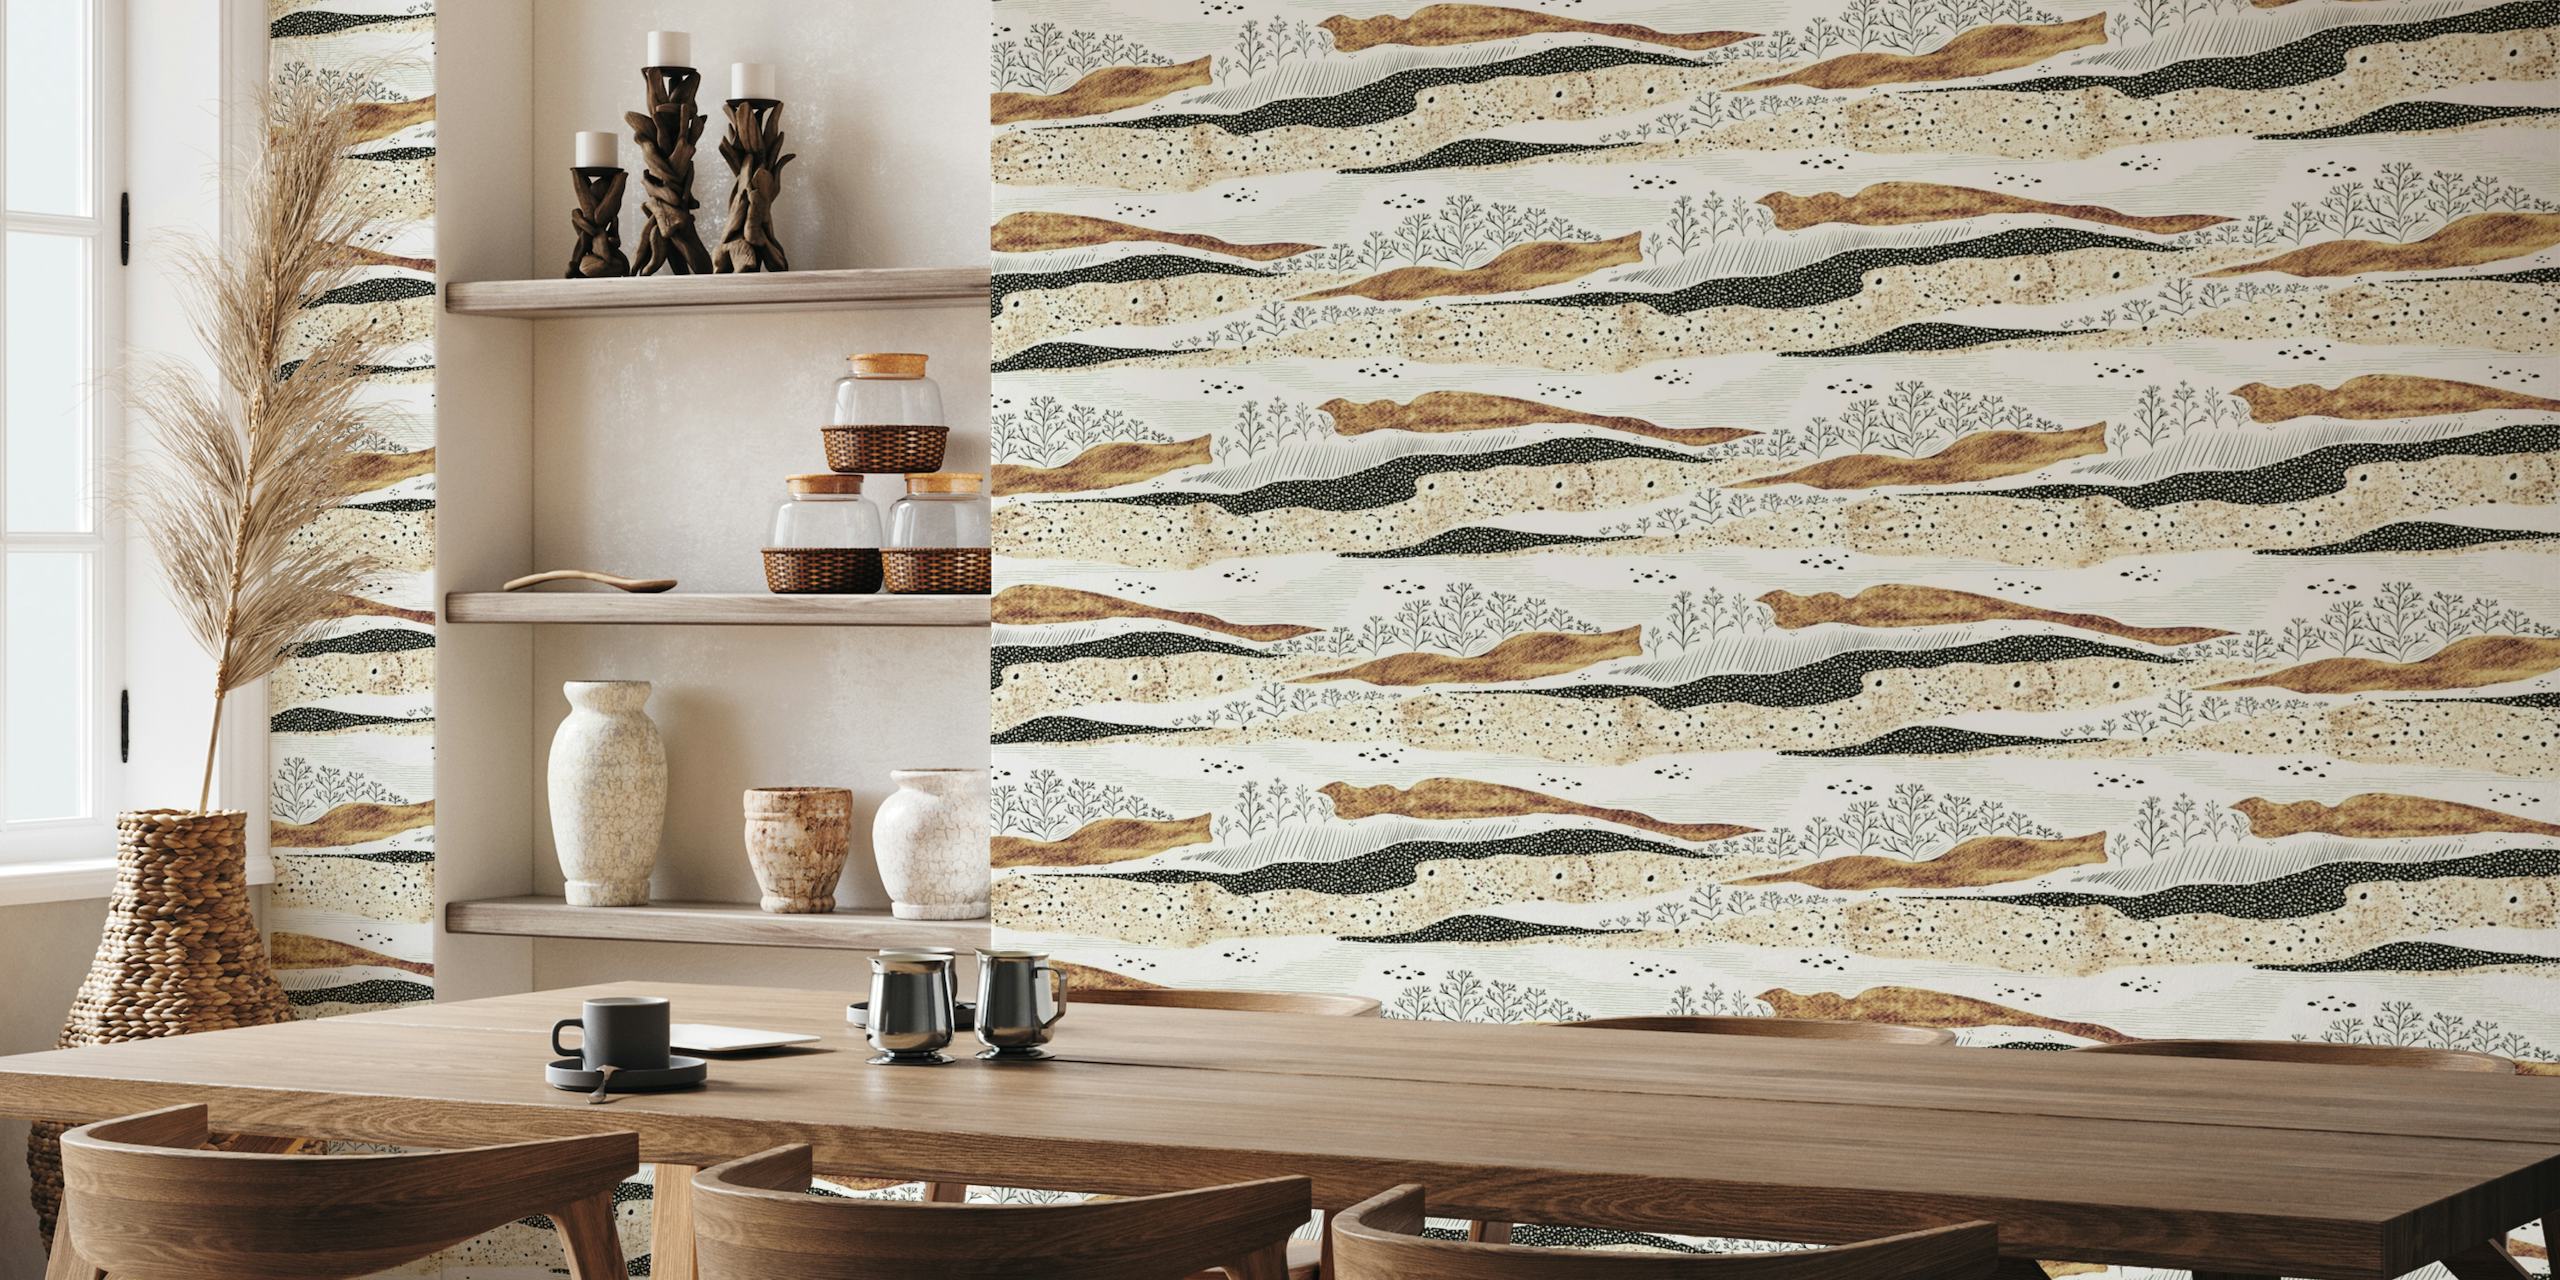 Apstraktna zidna slika inspirirana pustinjom s valovitim uzorcima i neutralnim tonovima.